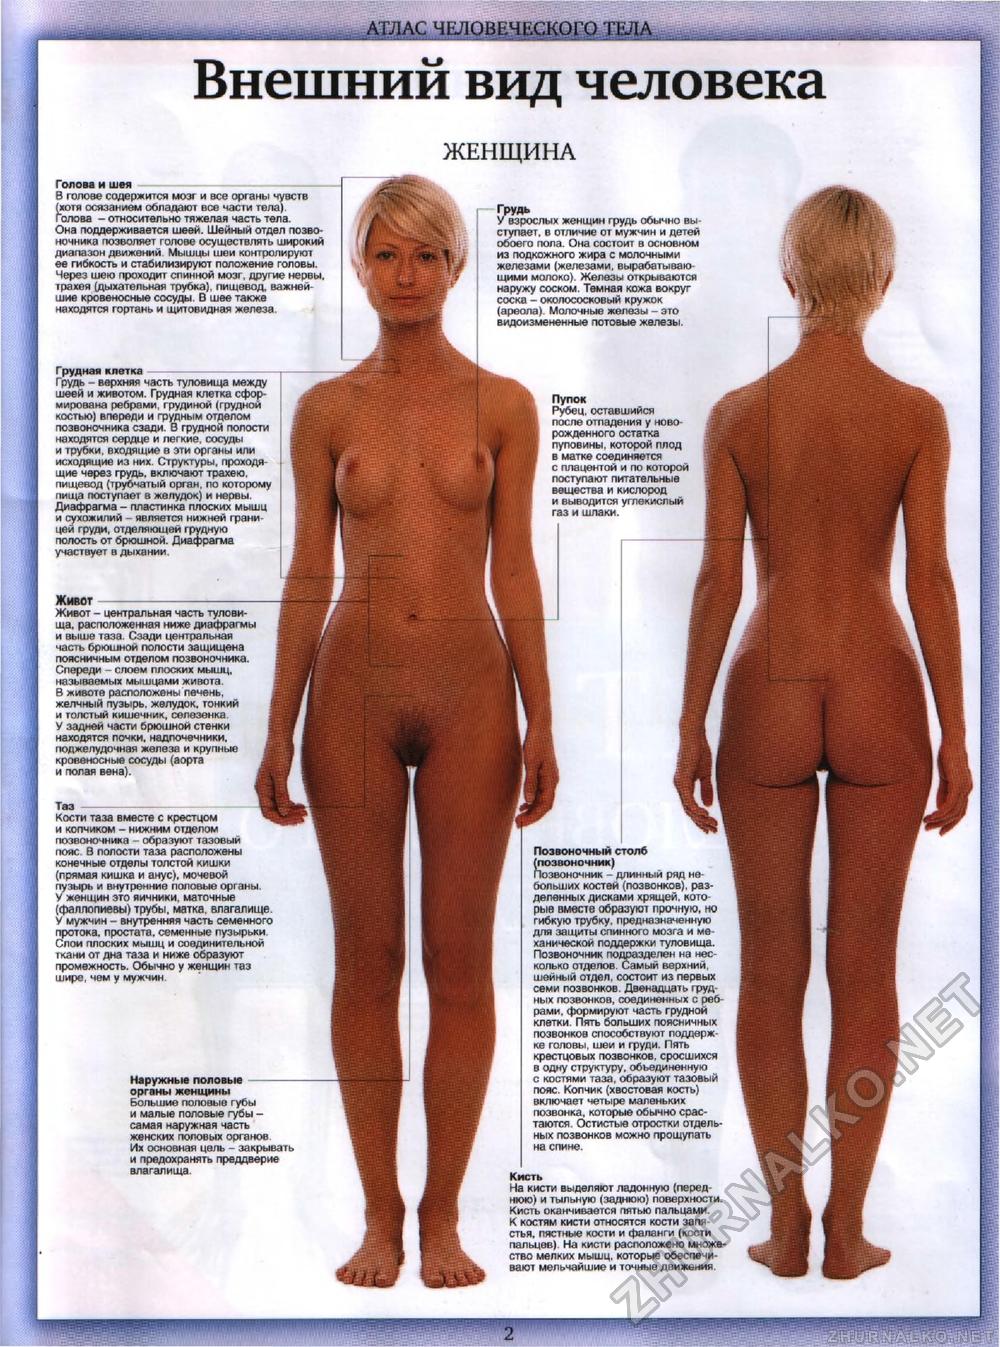 Тело человека №00 - Атлас человеческого тела, страница 2